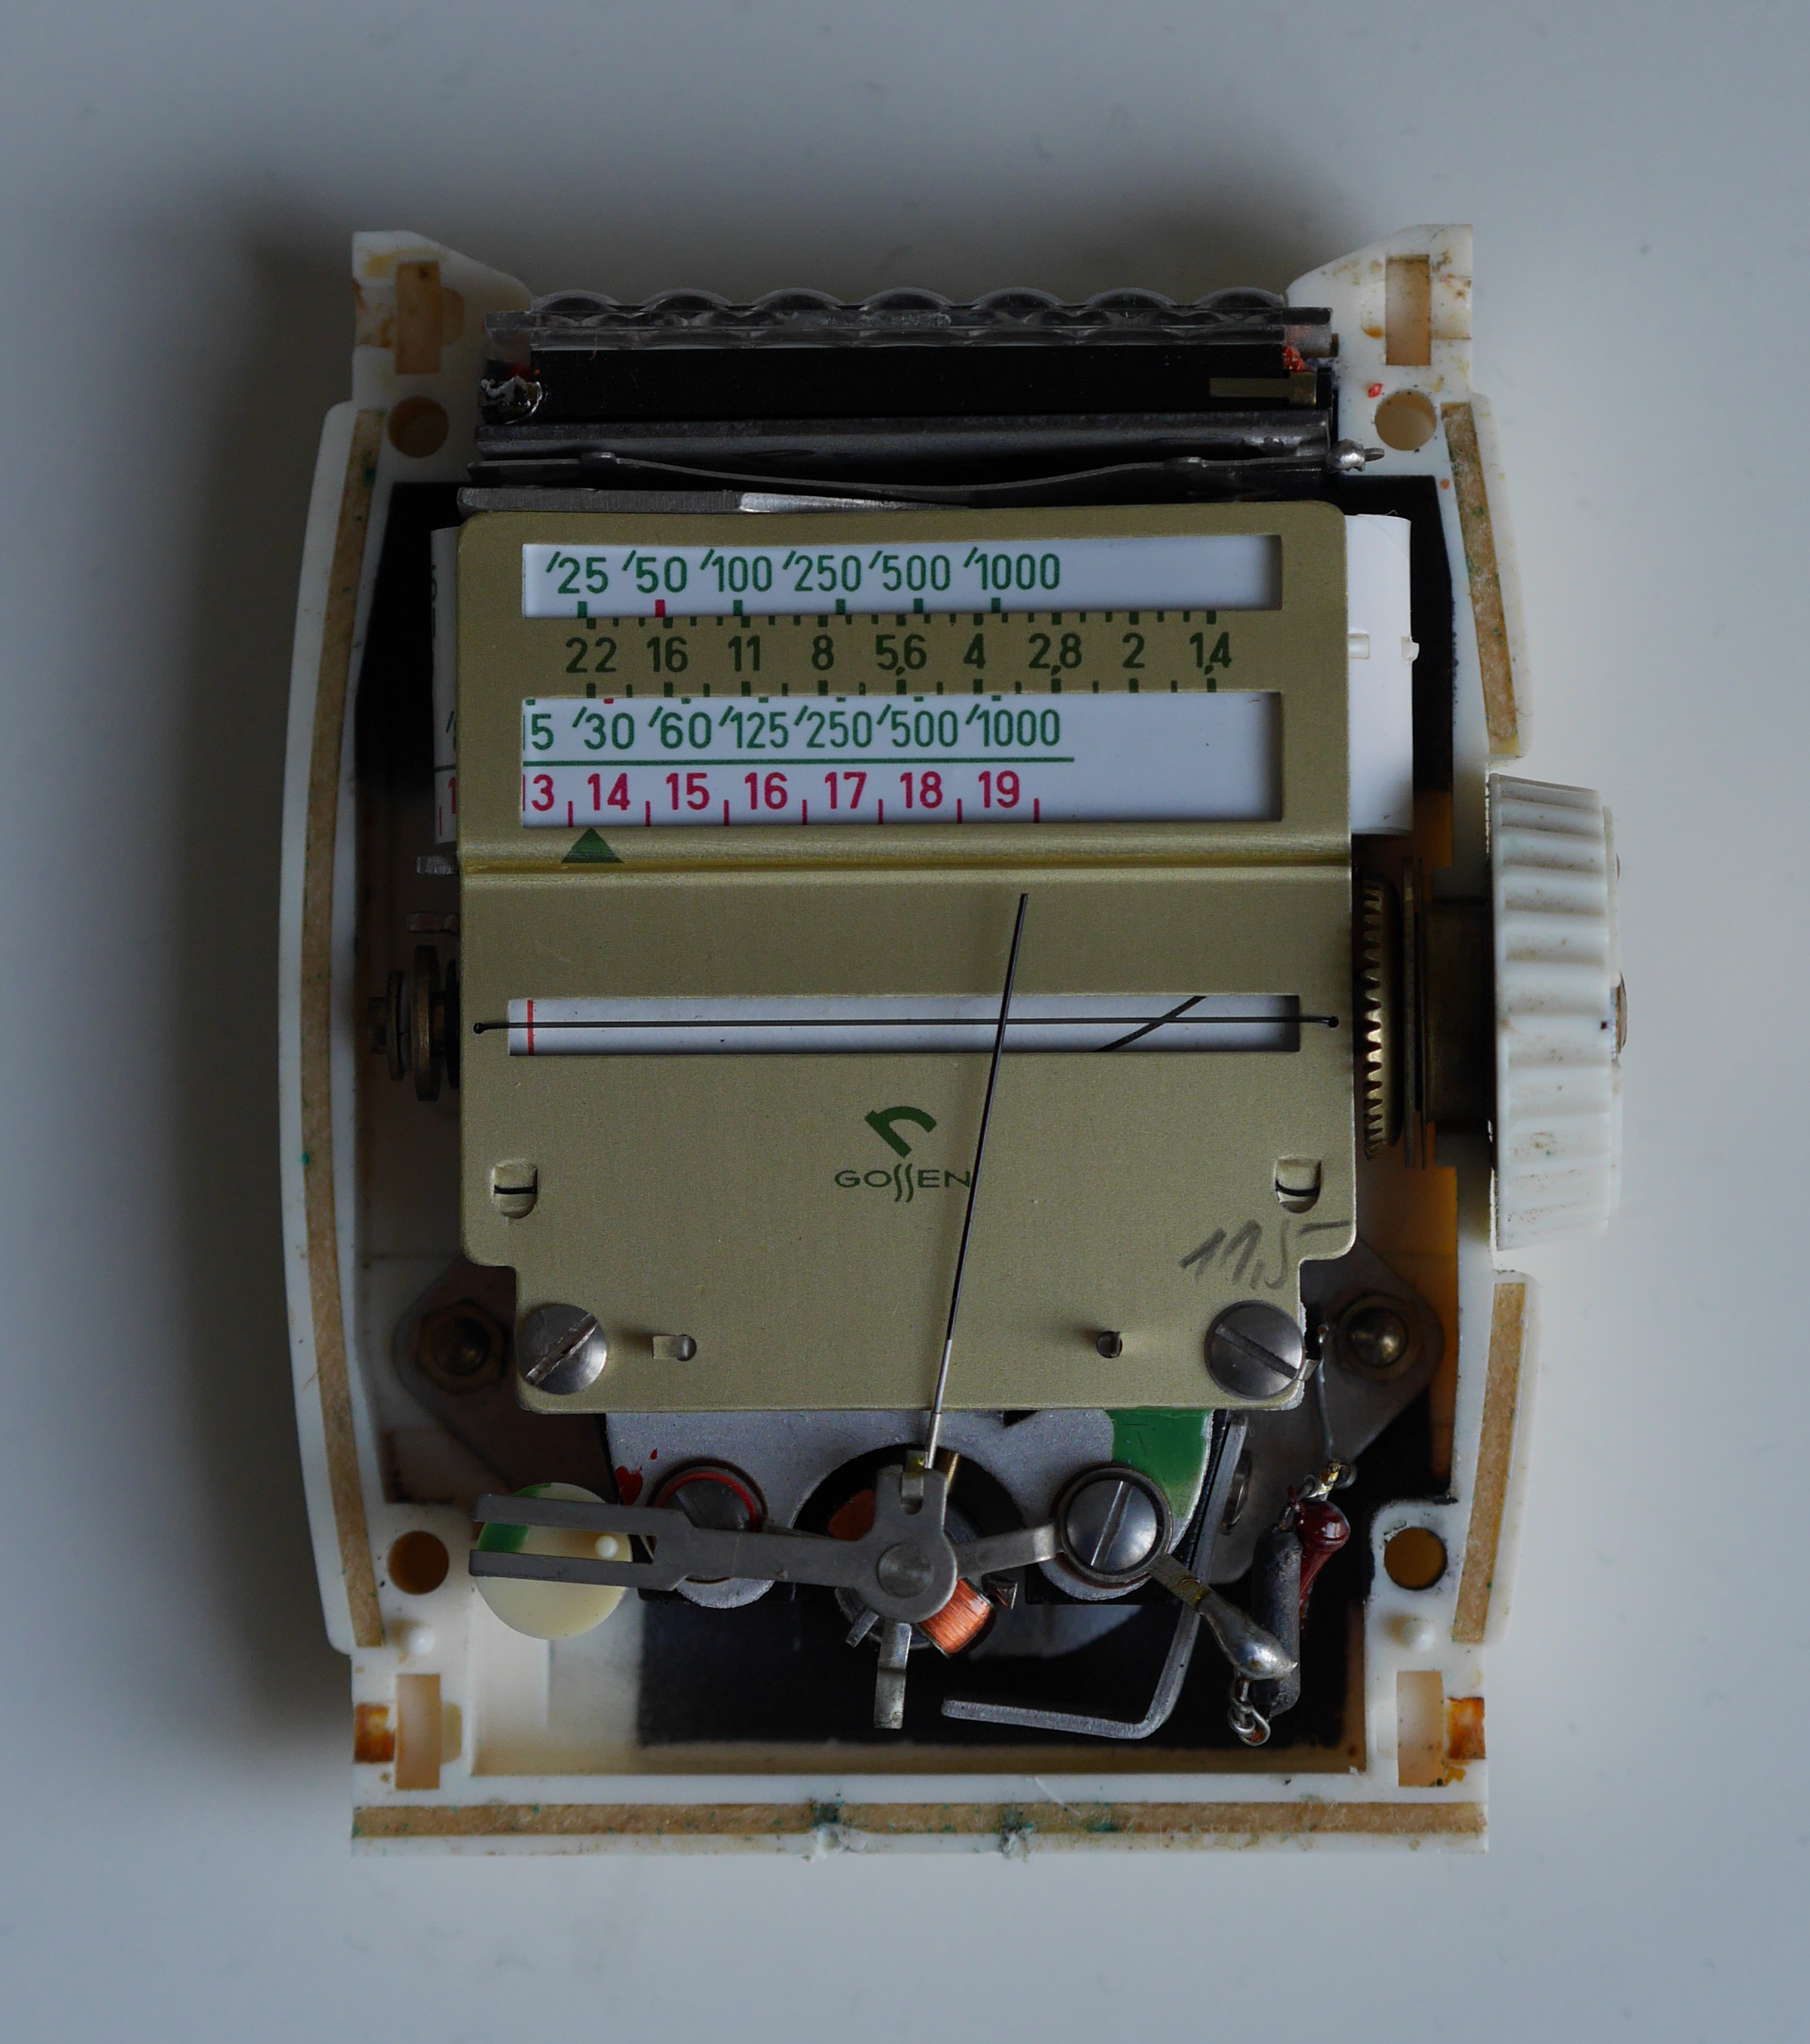 Open case of a Gossen Sixtomat analog light meter